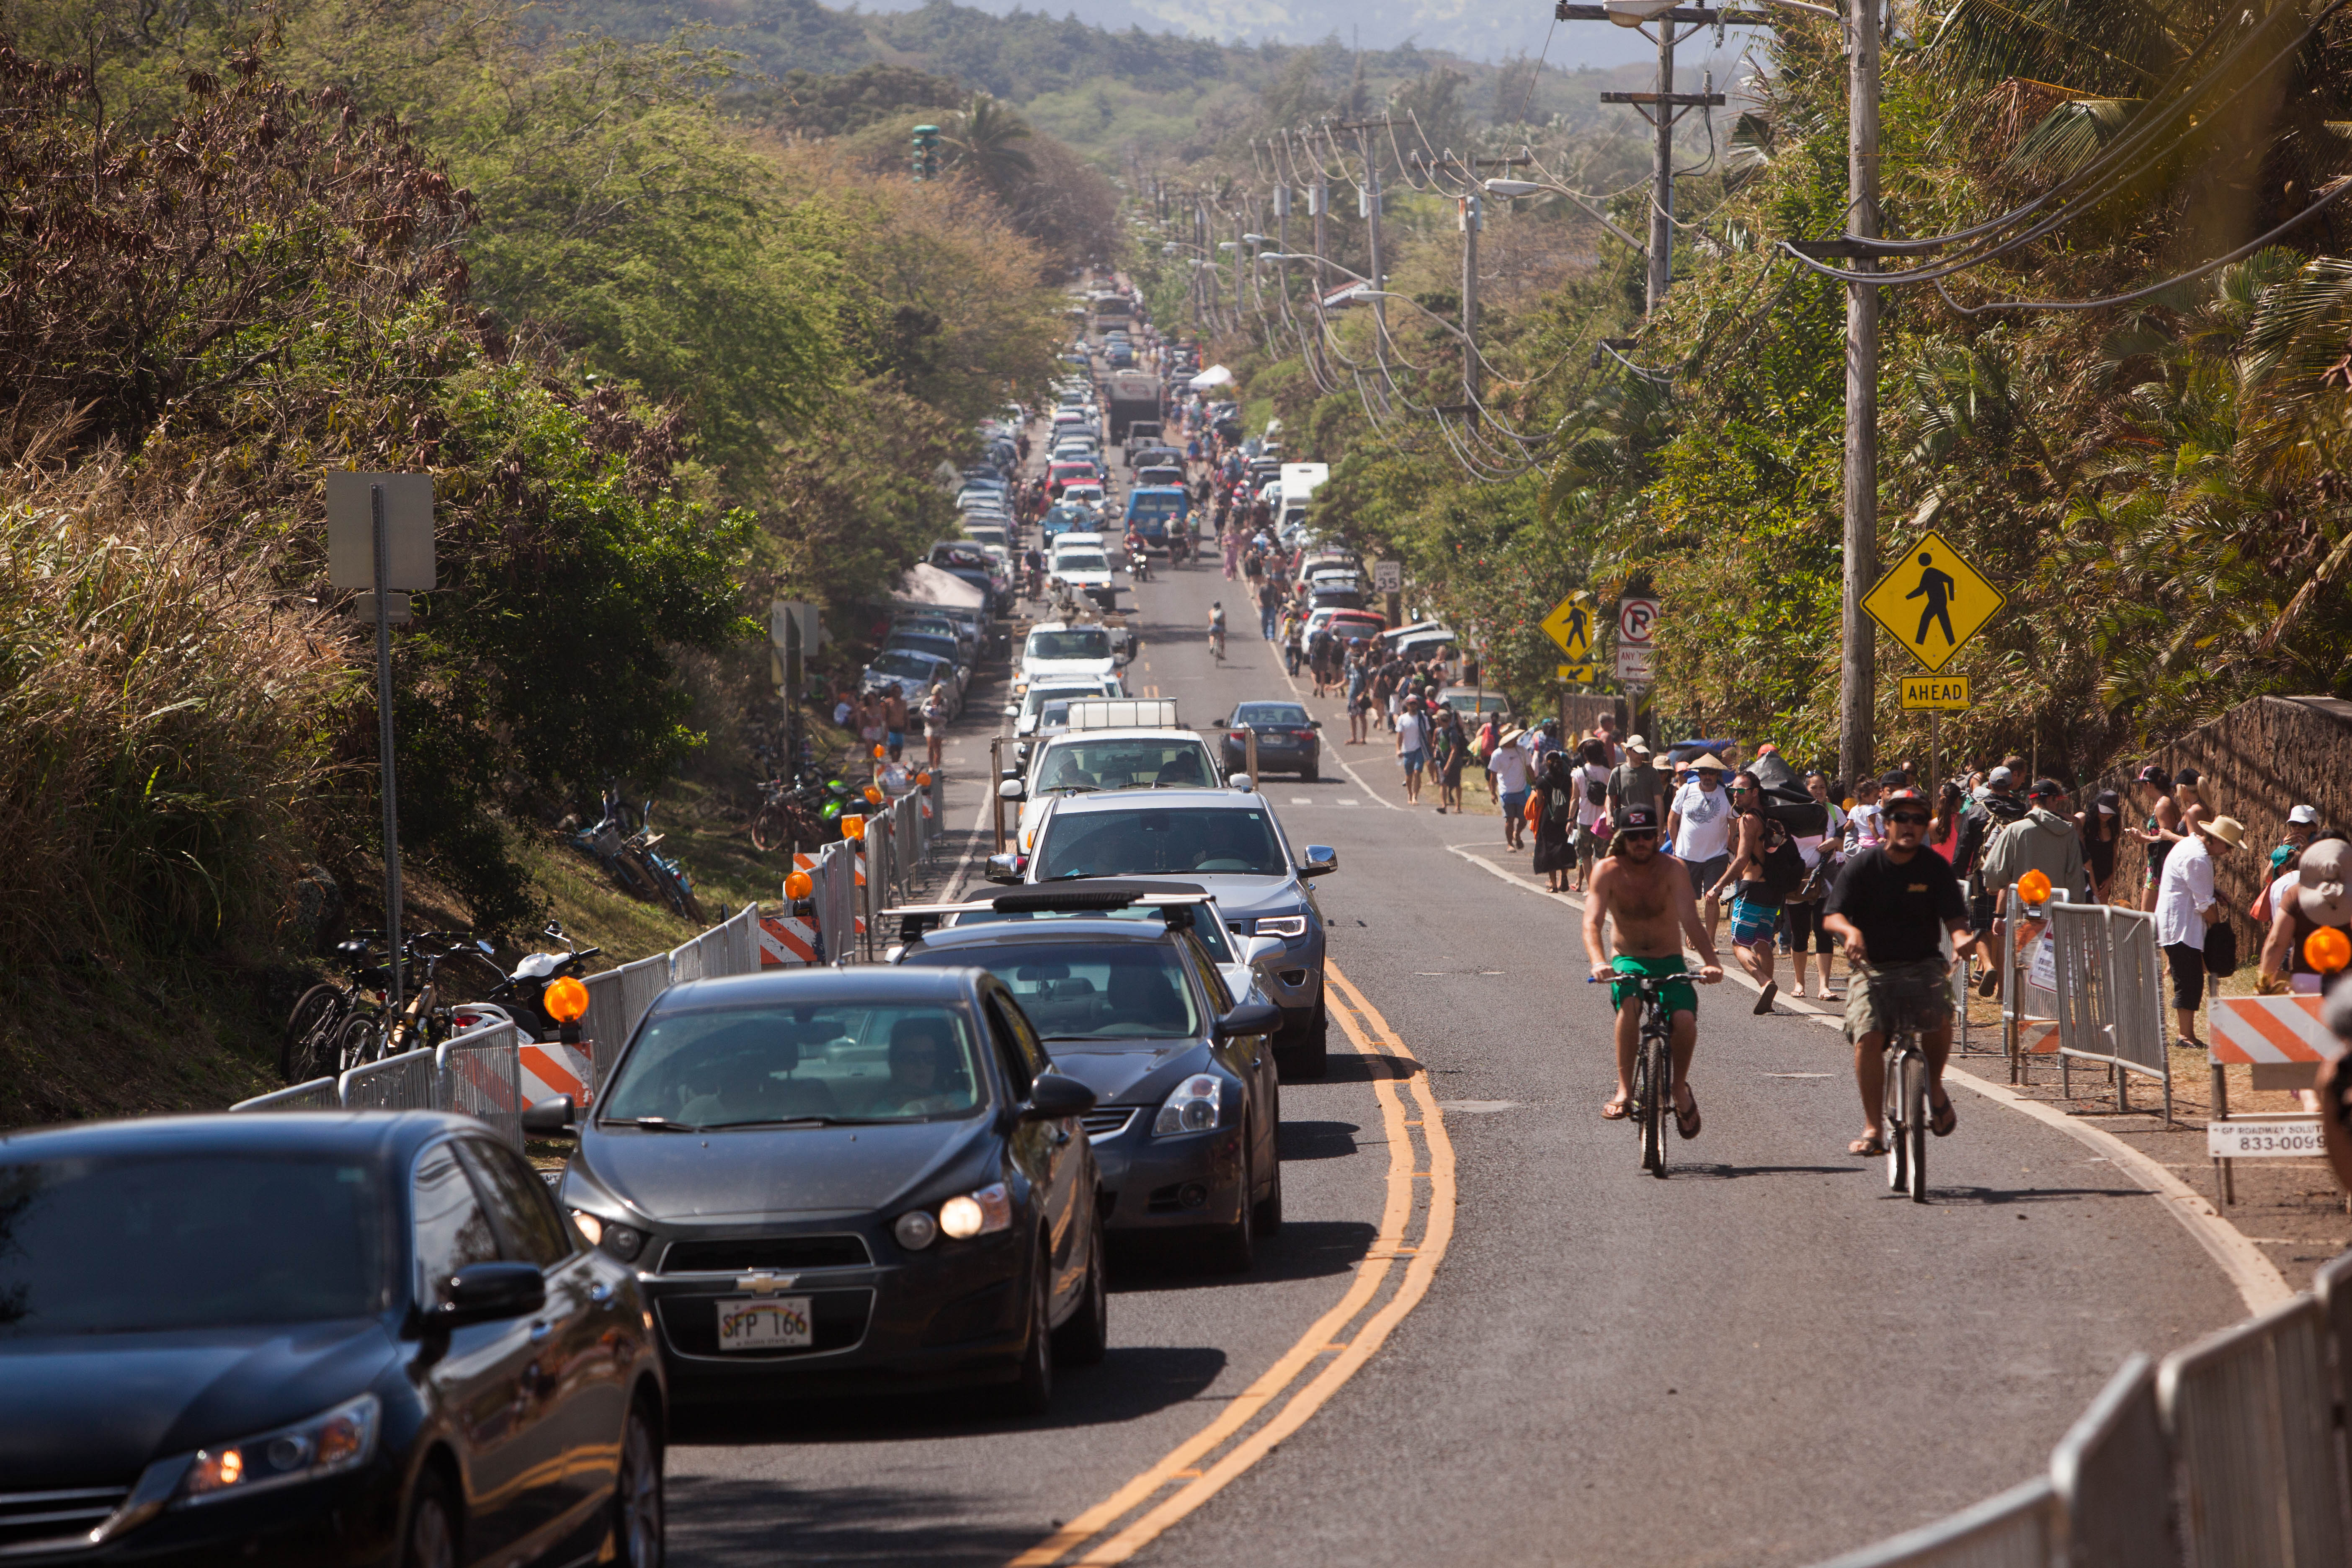 photo of traffic jam at Waimea, Kamehameha Highway on the North Shore of Oahu